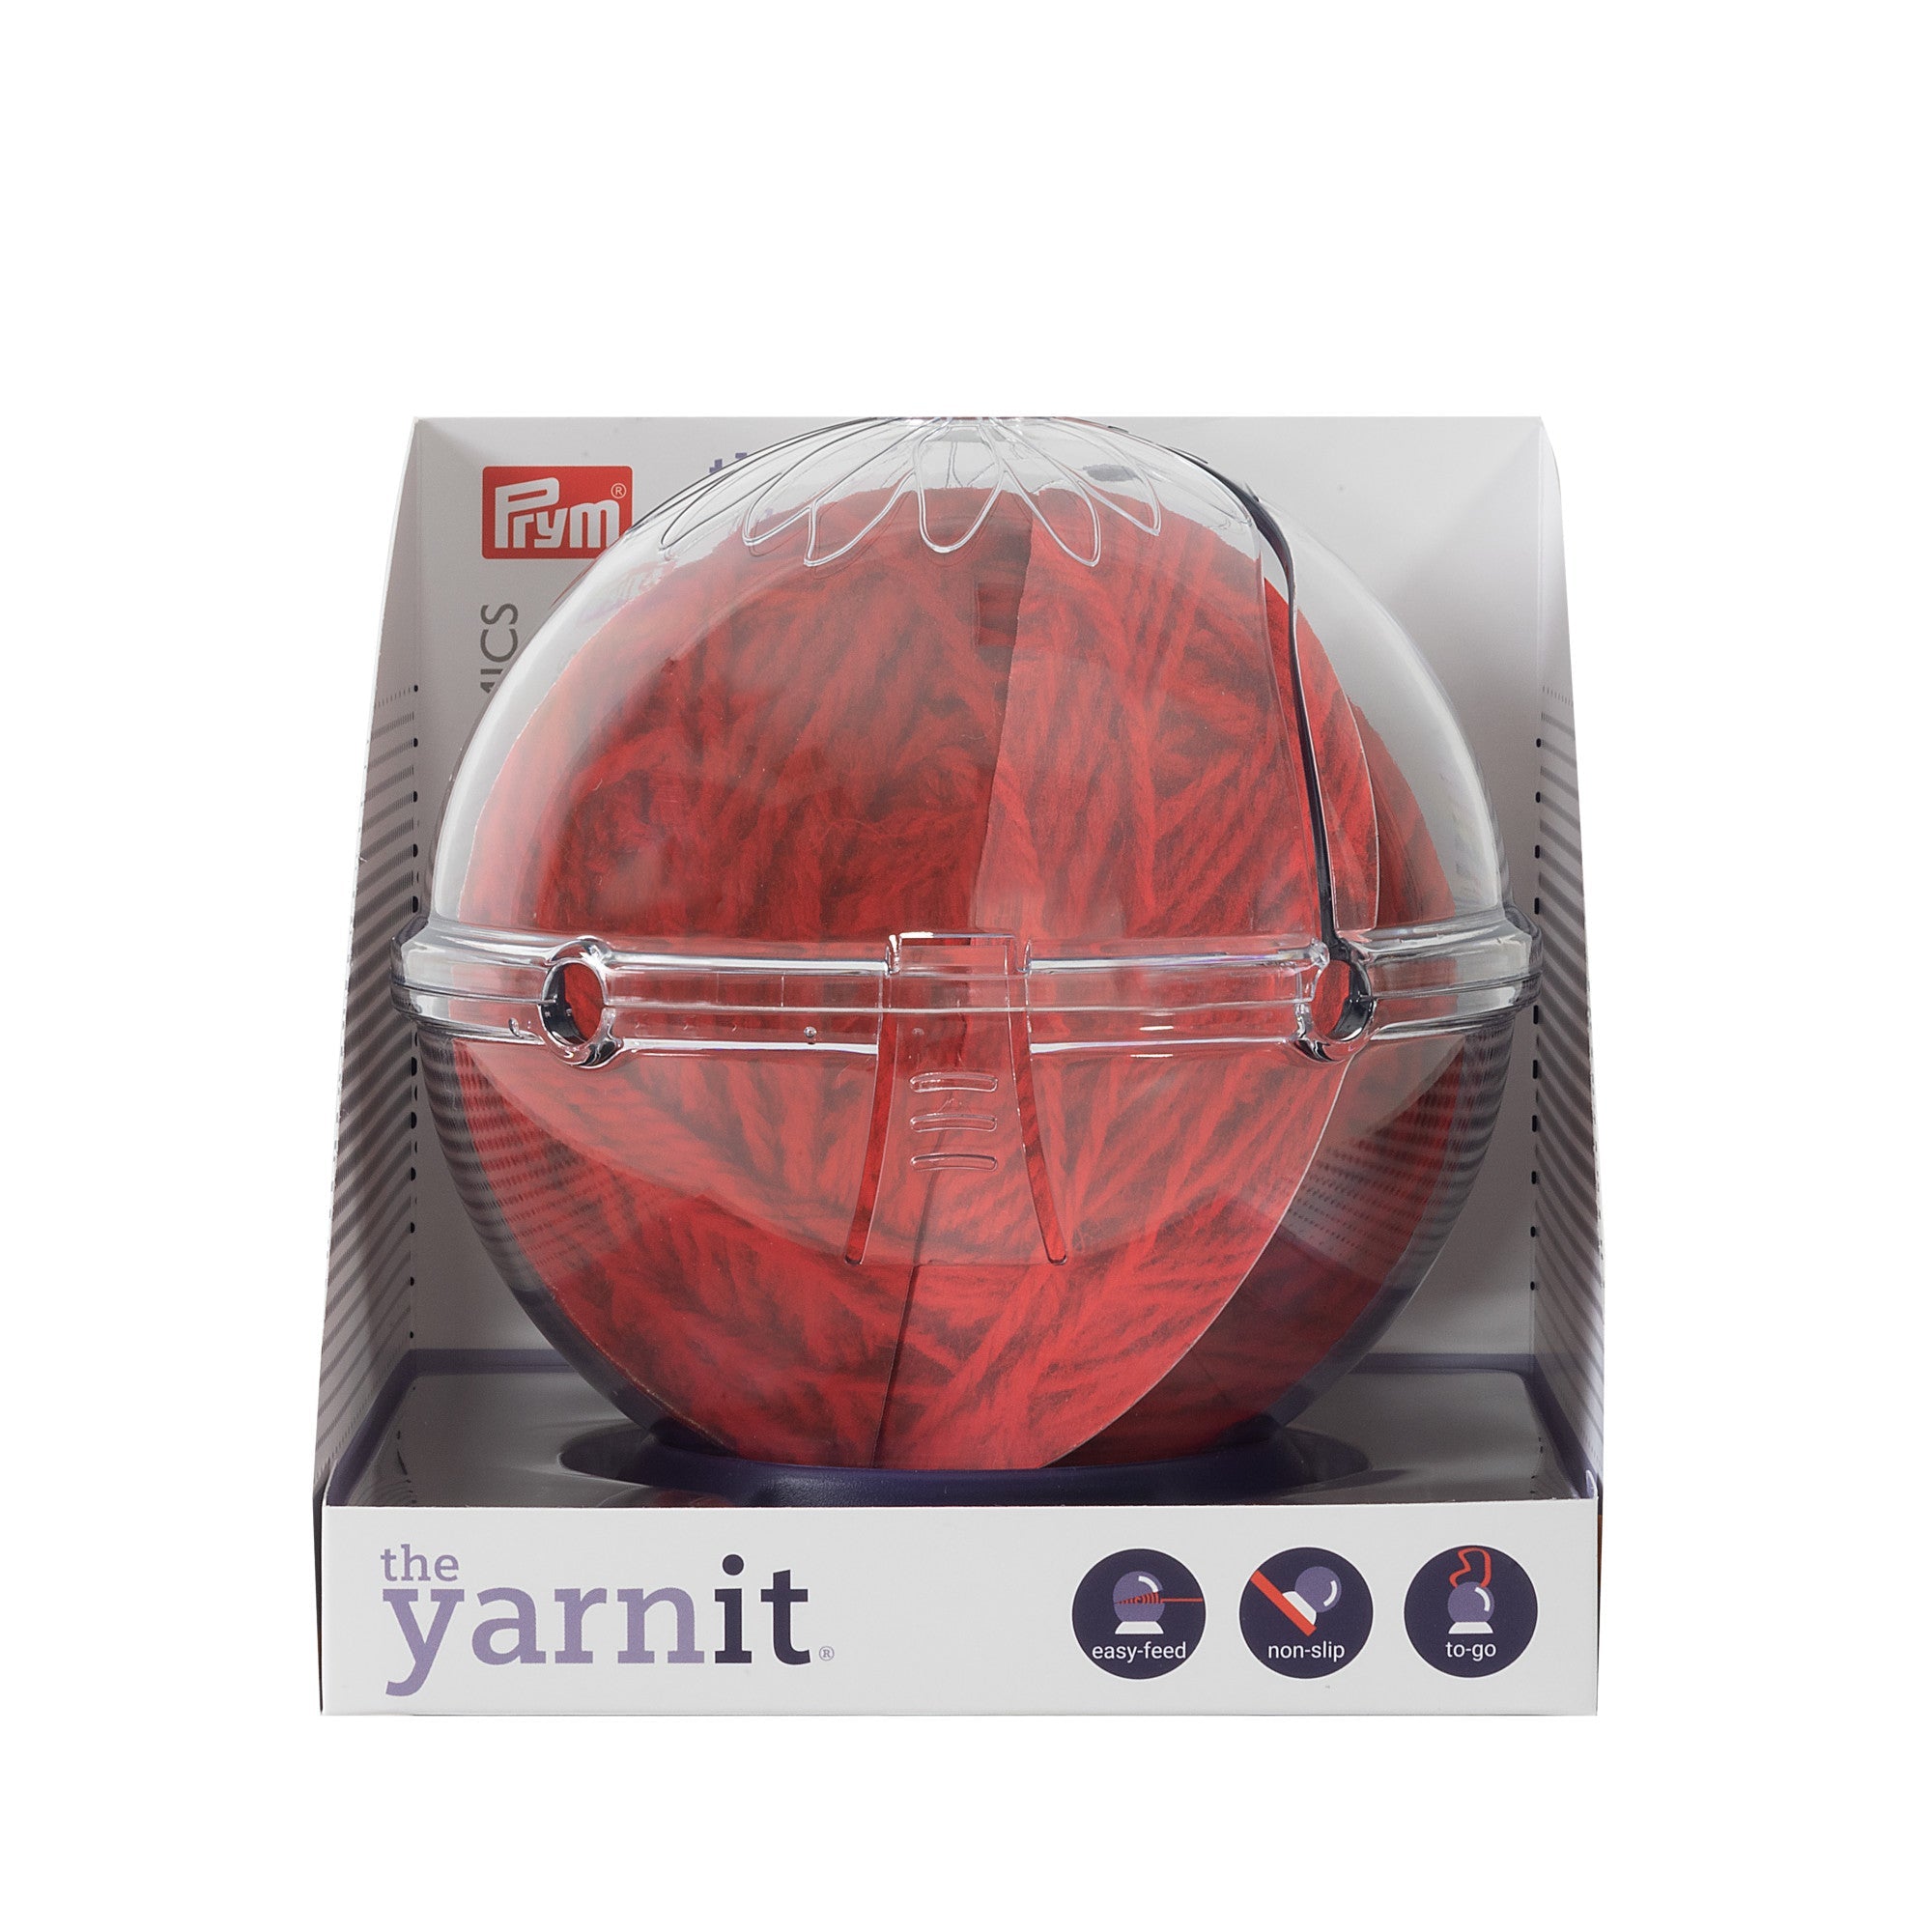 Prym Yarnit Yarn Holder Globe with Shoulder Strap and Storage Base